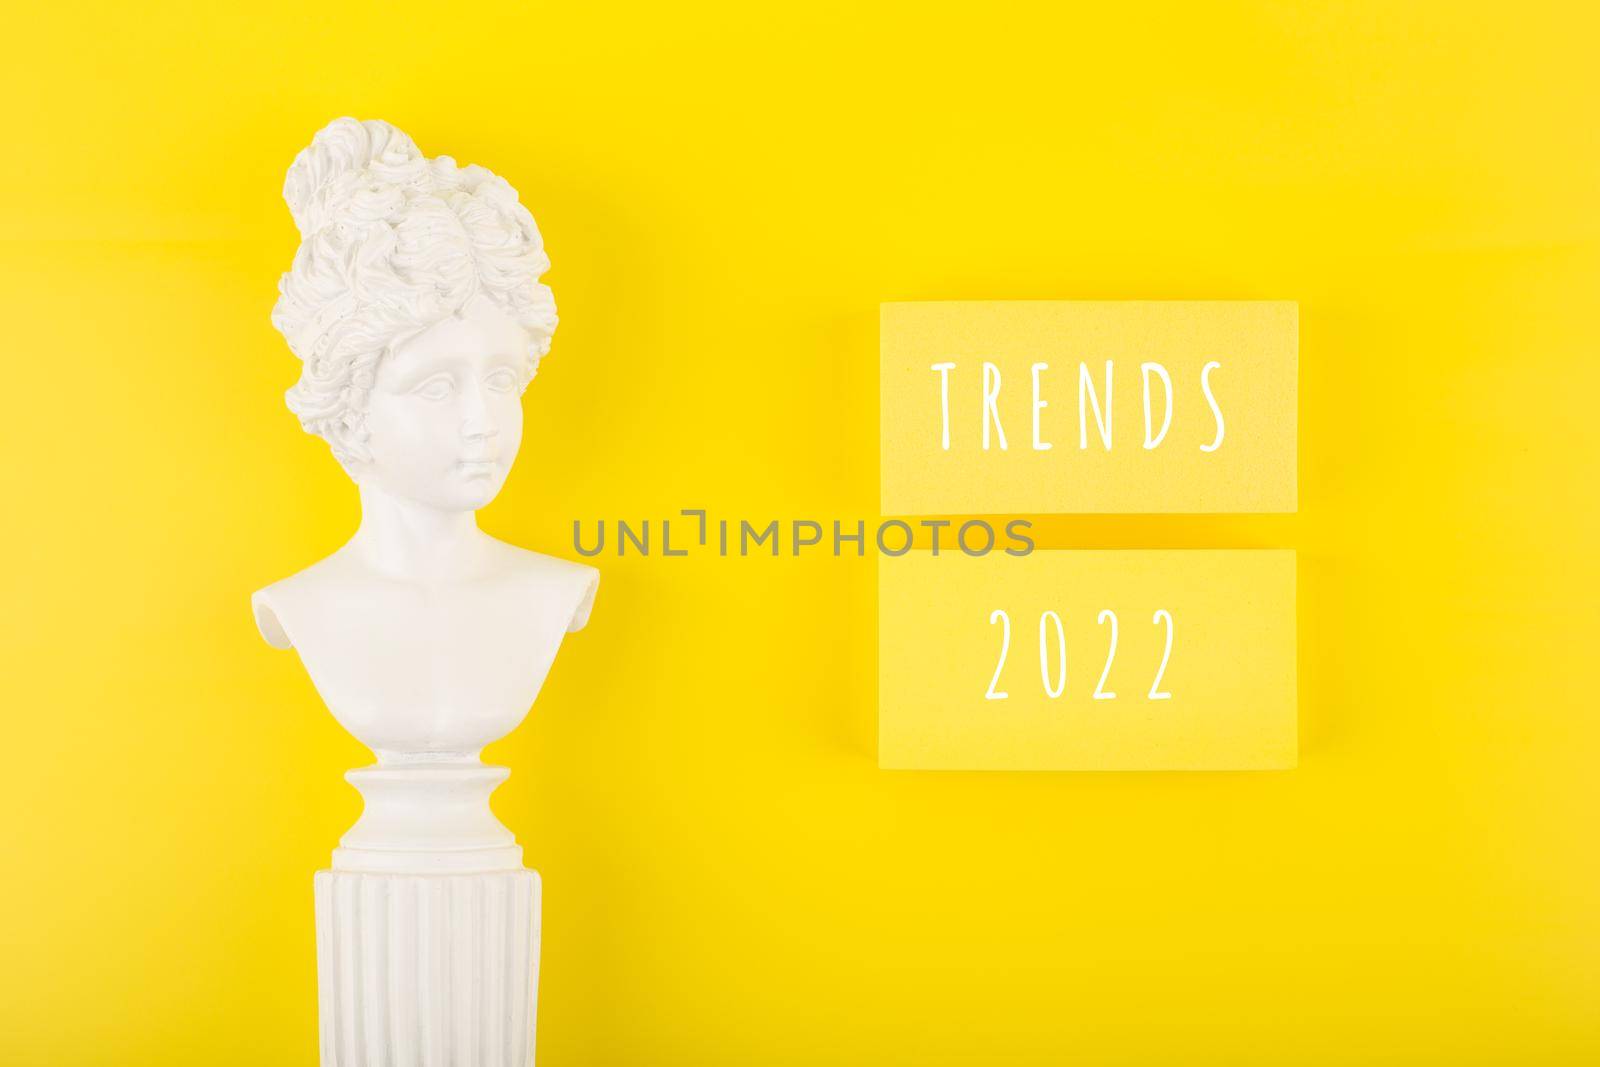 Trends 2022 written on rectangles on bright yellow background next to woman gypsum figure by Senorina_Irina